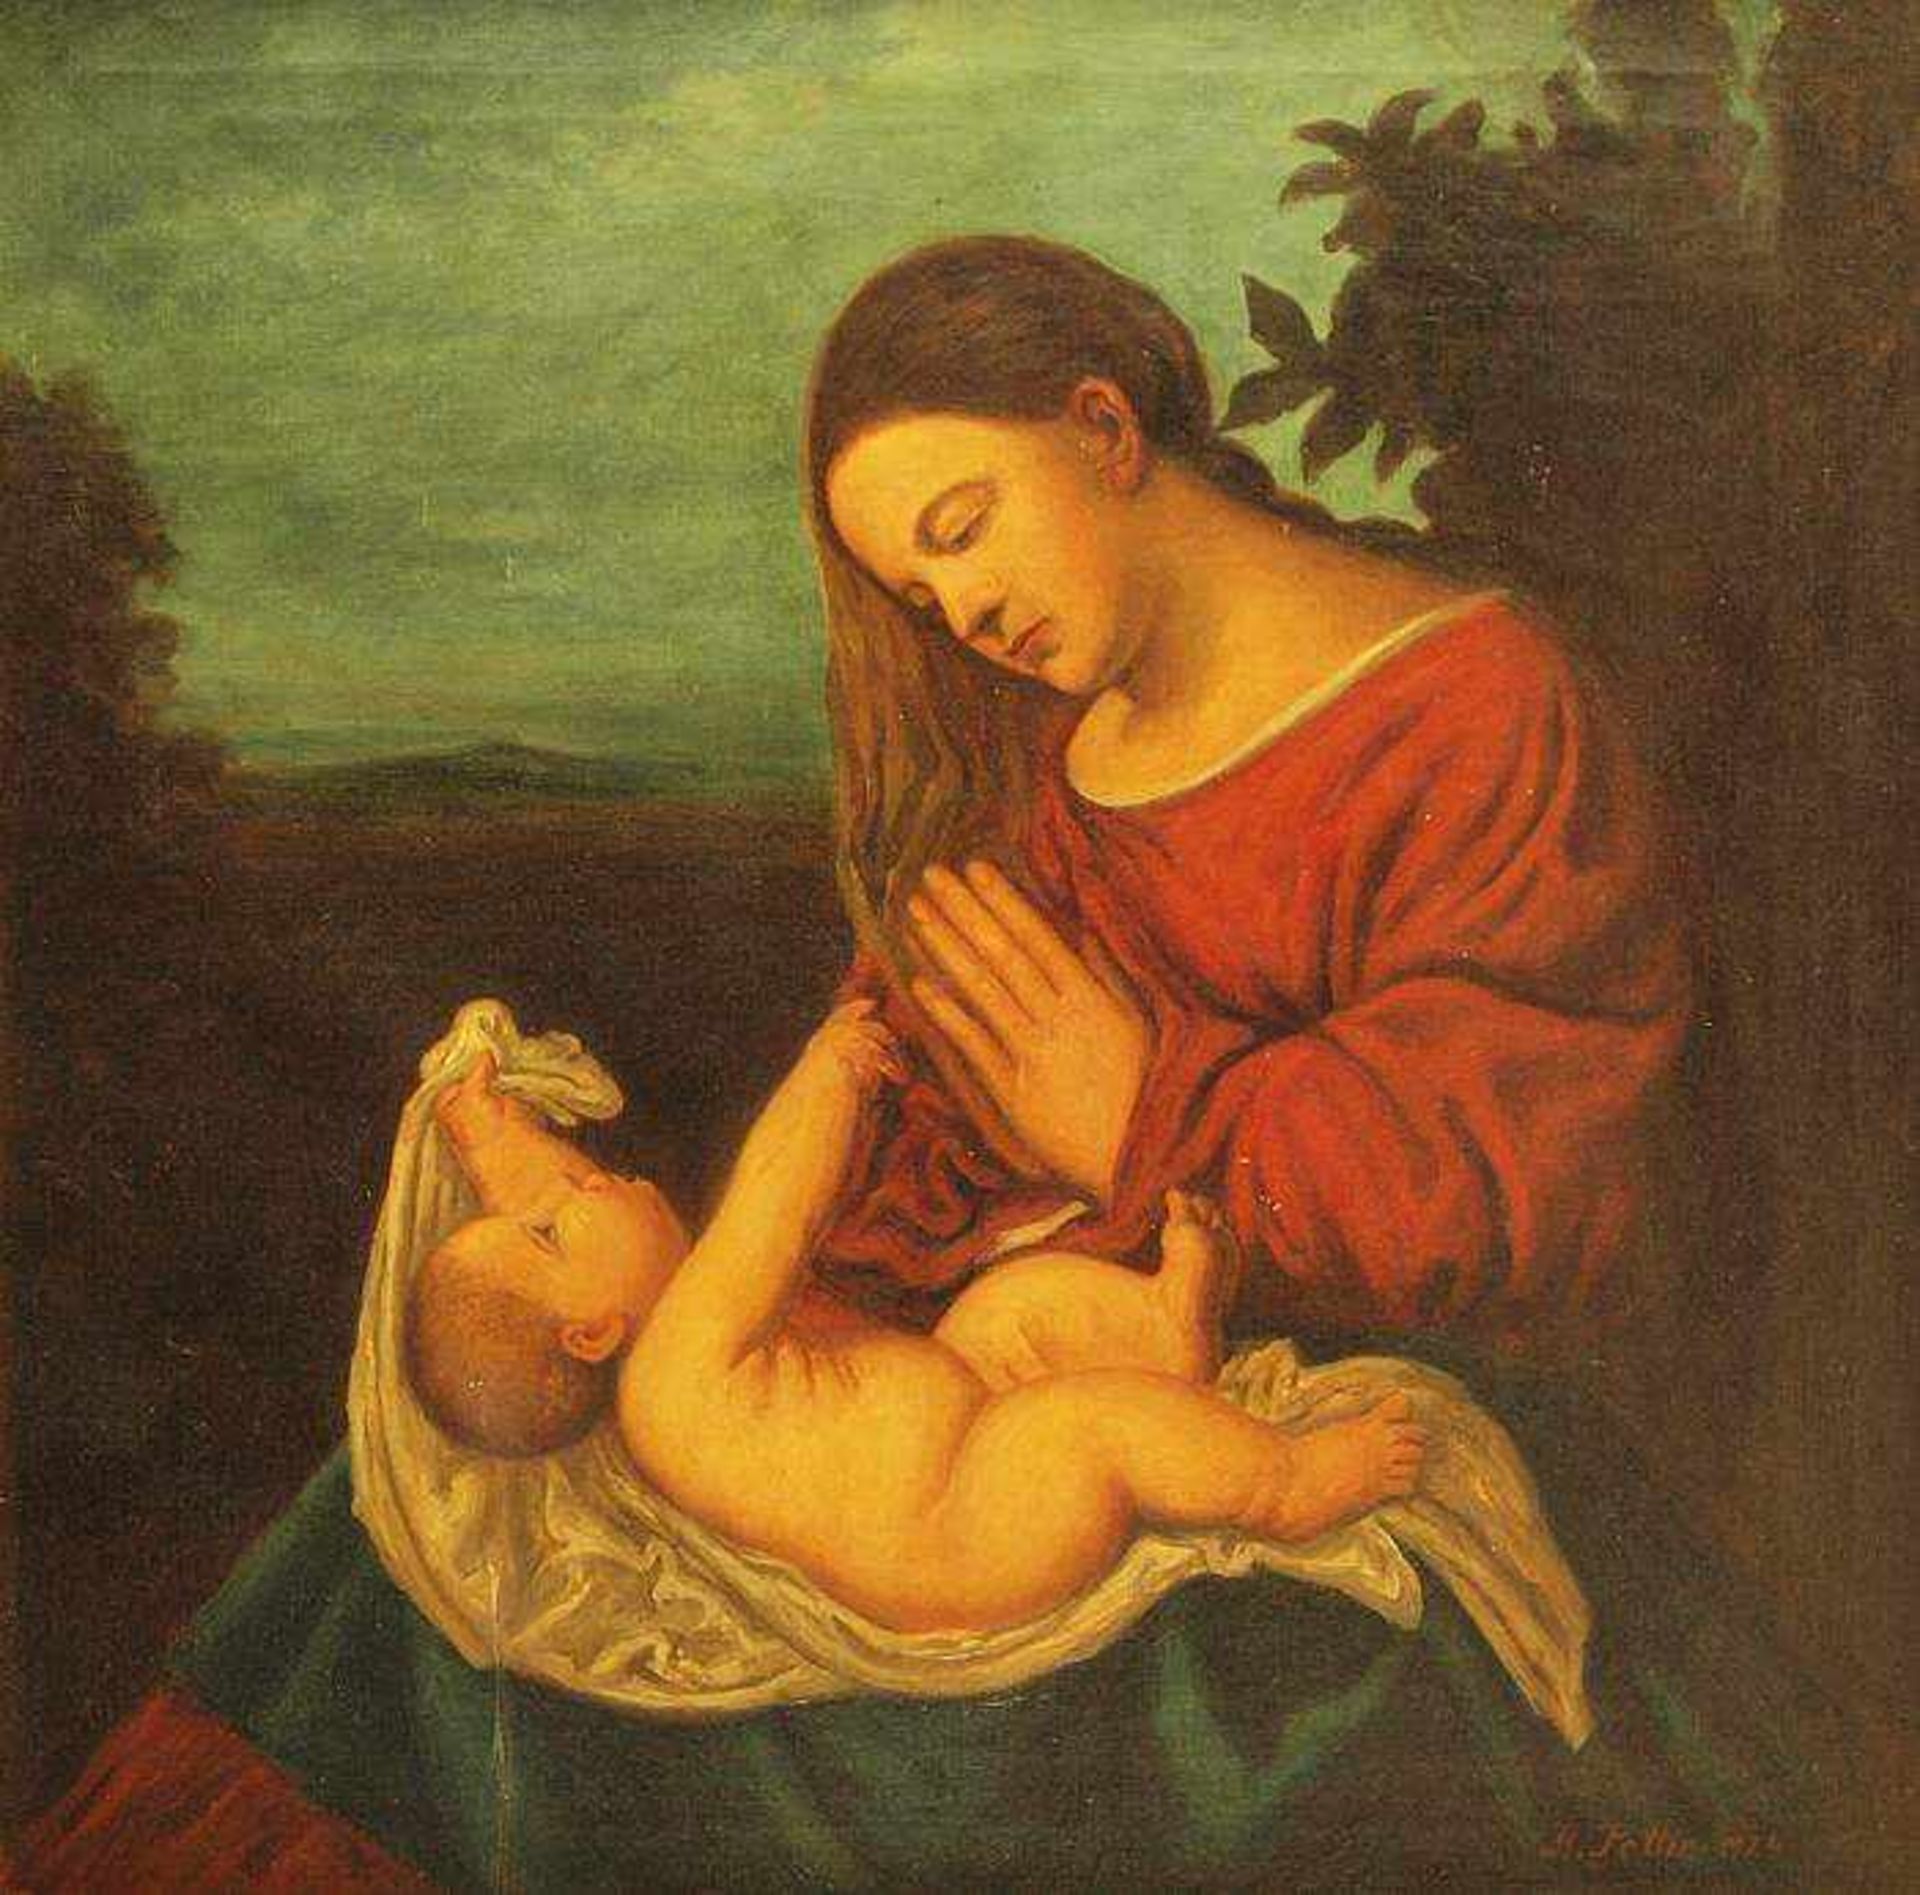 Maler 19. Jahrhundert. PELTIN, R Maler 19. Jahrhundert. Maria mit Kind. Öl auf Leinwand. partielle